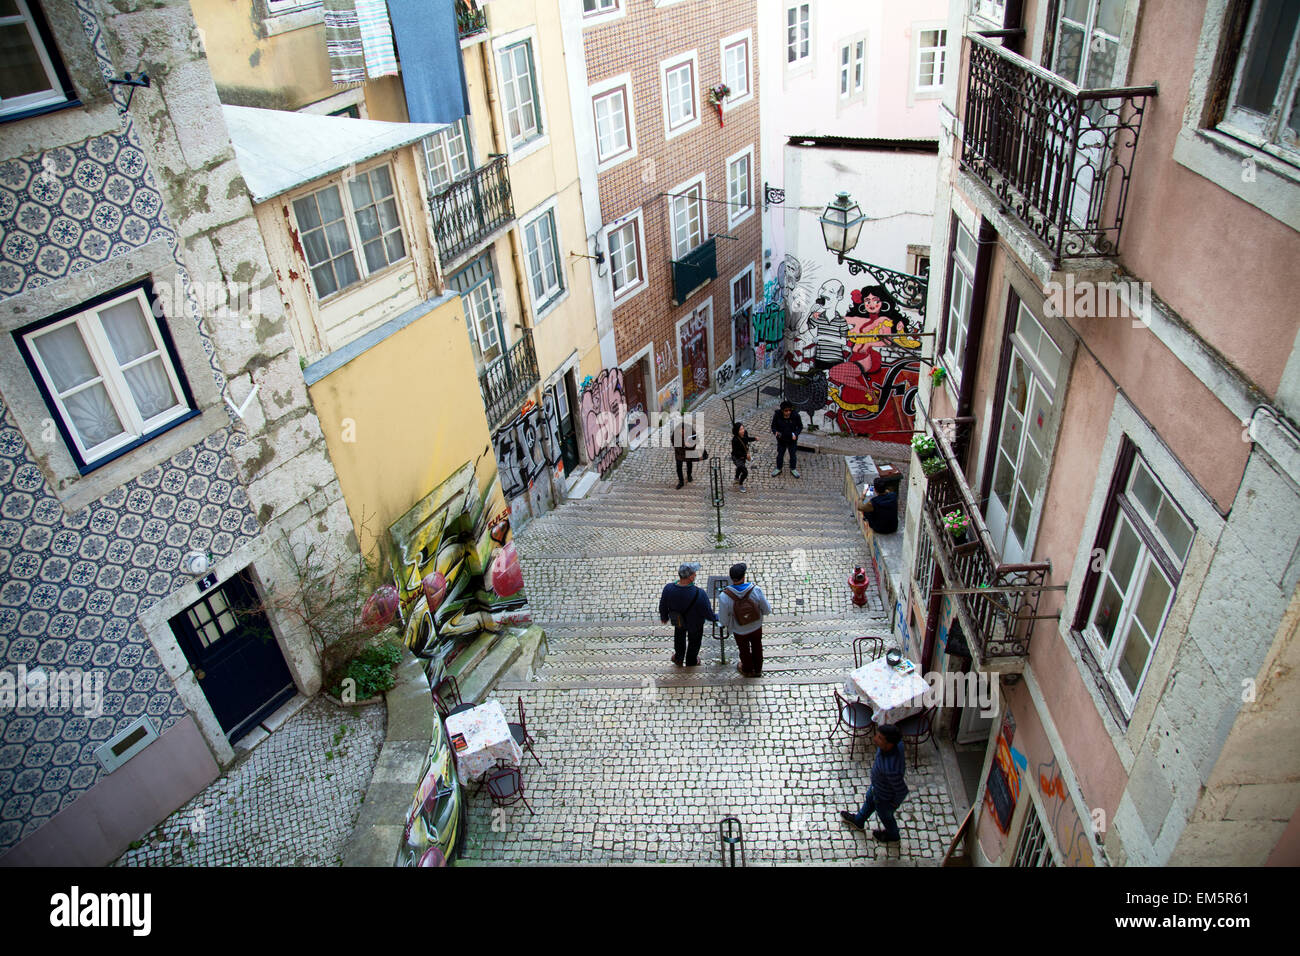 Escadinhas do Sao Cristovao Steps in Historic Quarter of lIsbon - Portugal Stock Photo